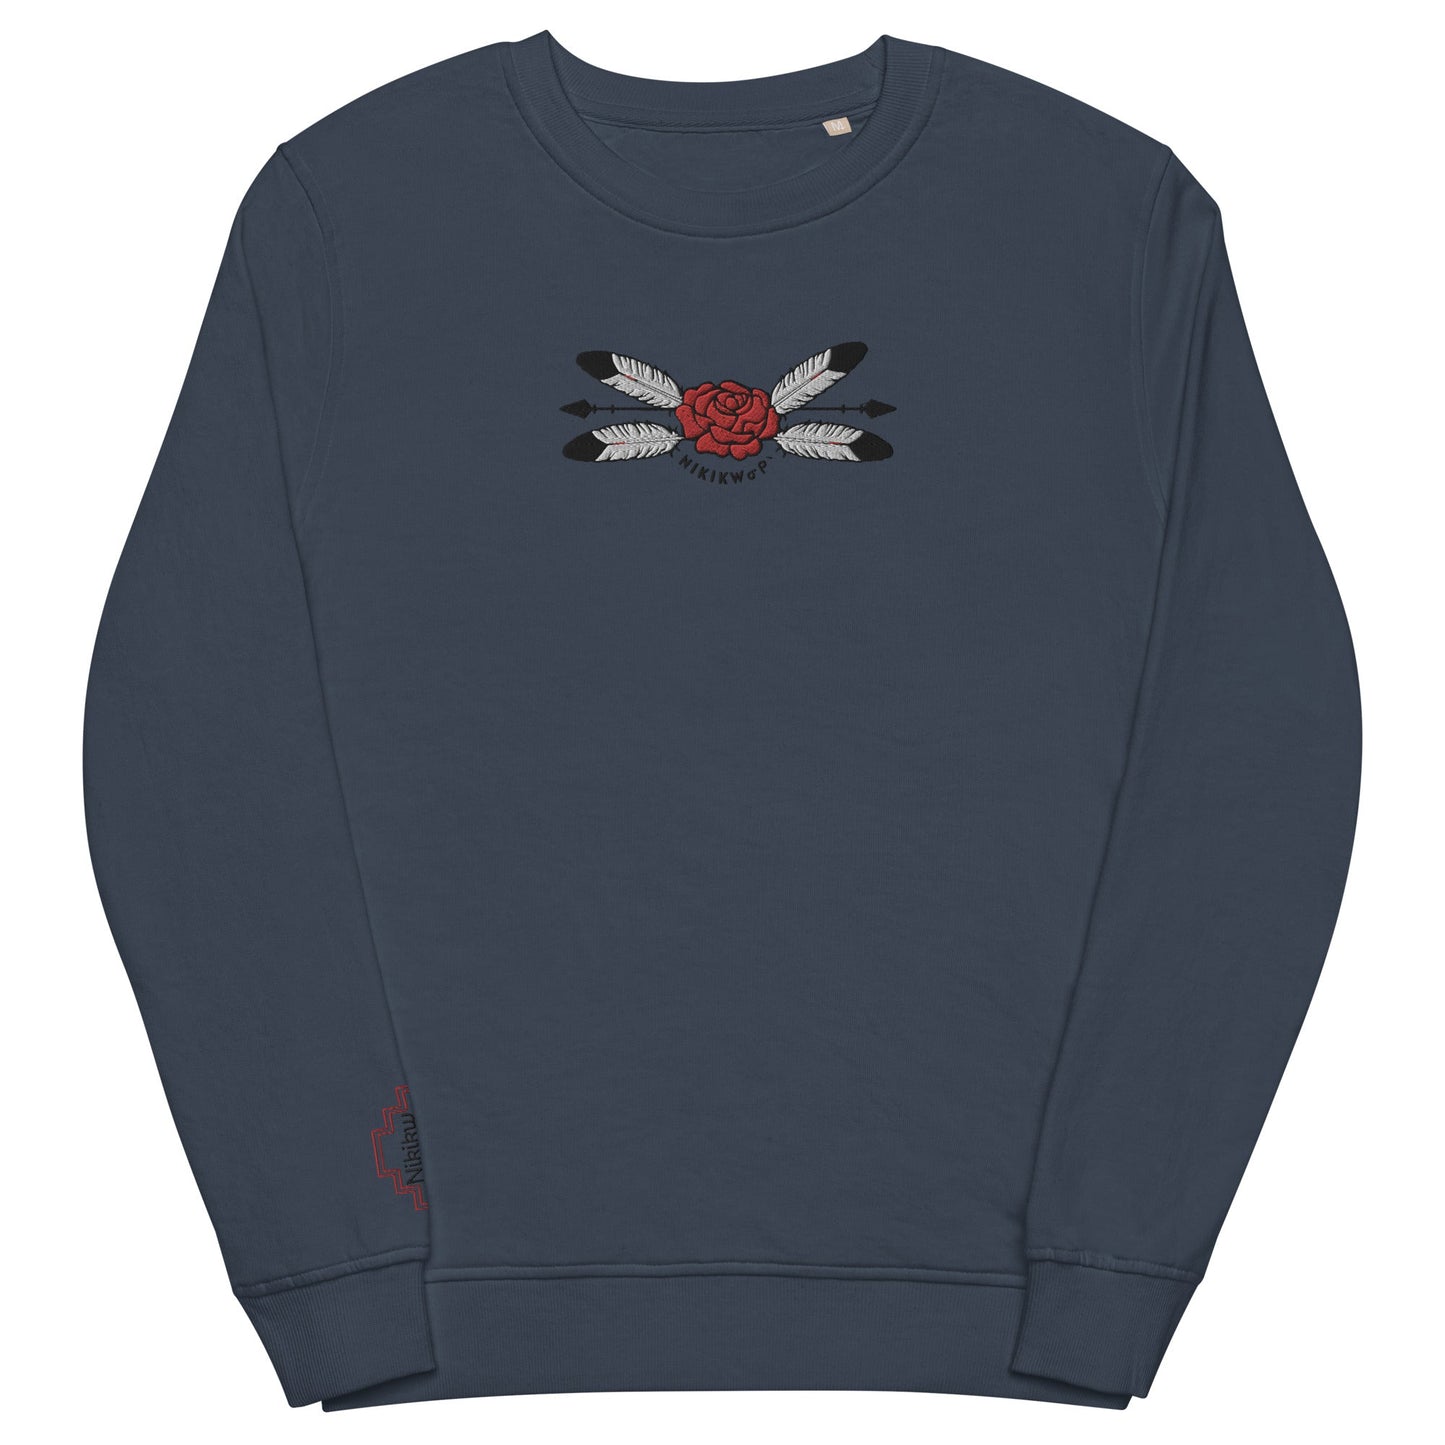 Unisex organic sweatshirt Rose Eagle Feathers - Nikikw Designs